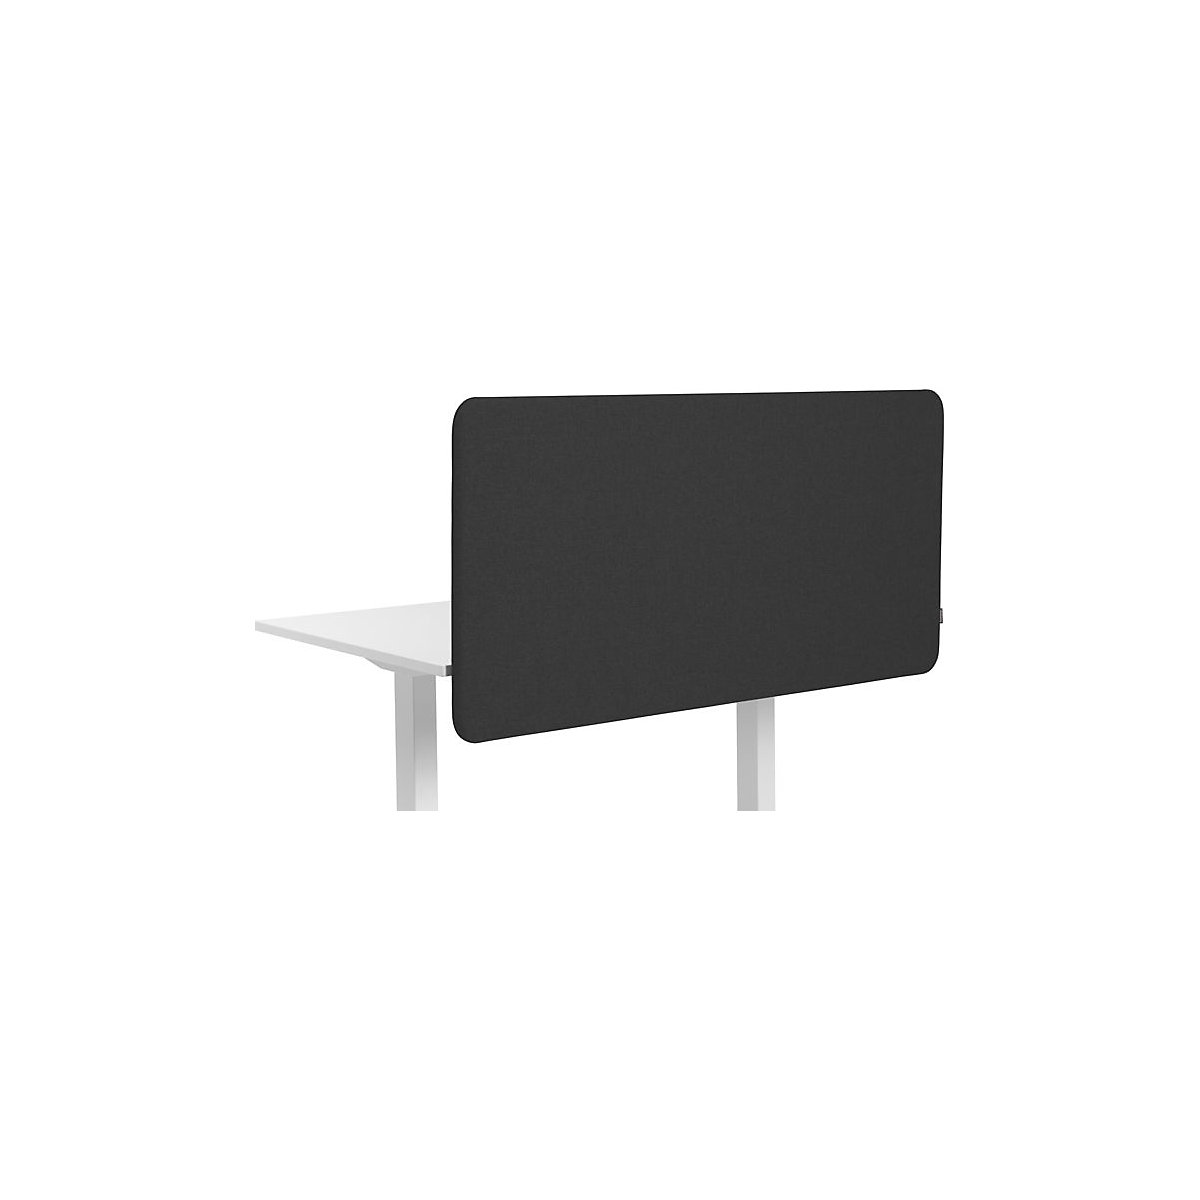 Softline Salsa acoustic desk partition, suspended downwards, HxW 650 x 600 mm, fabric, black-4